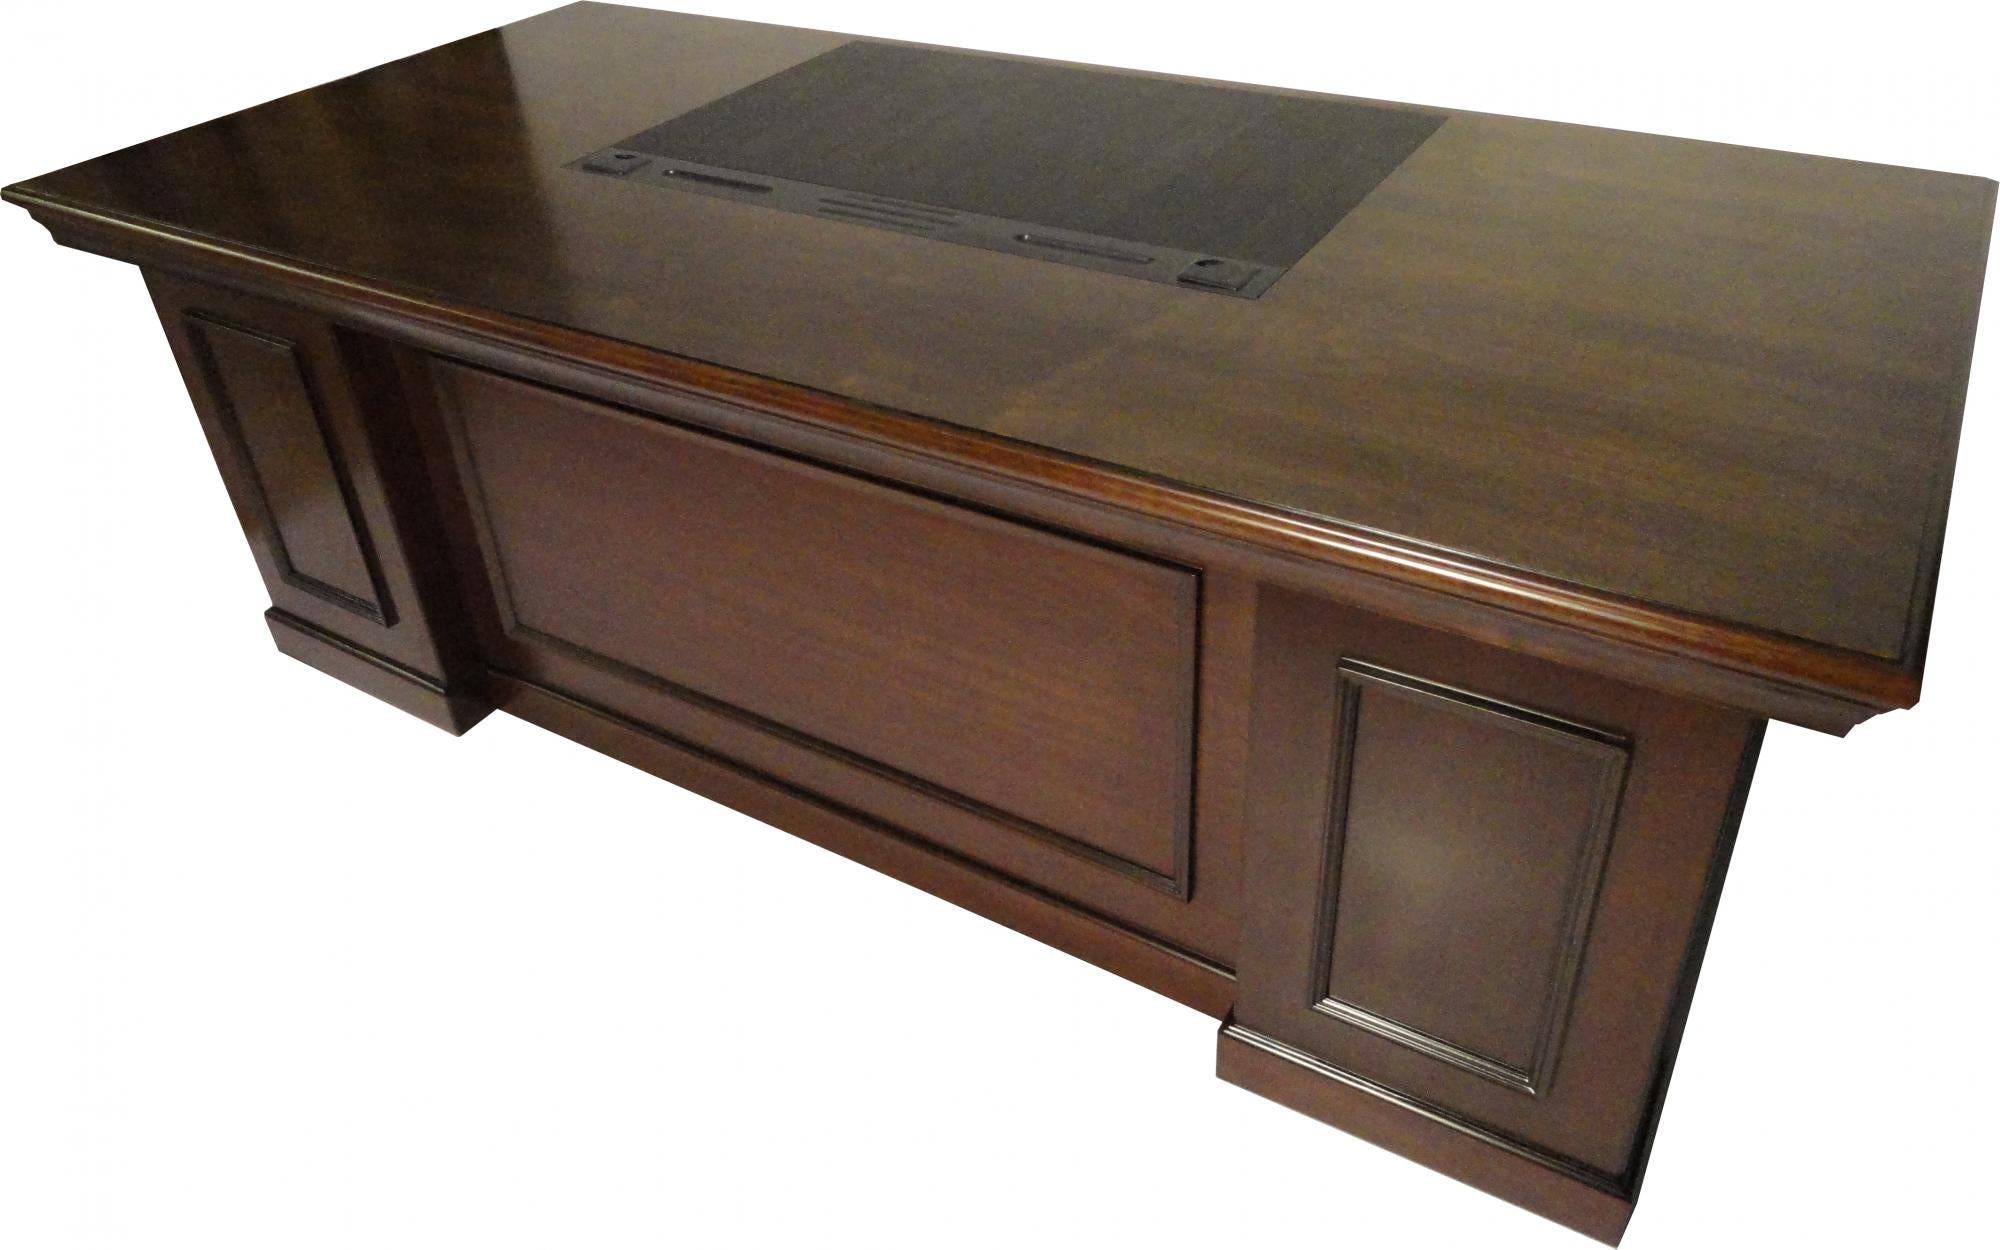 Real Walnut Veneer Executive Office Desk With Pedestal & Return - UG203-2000mm